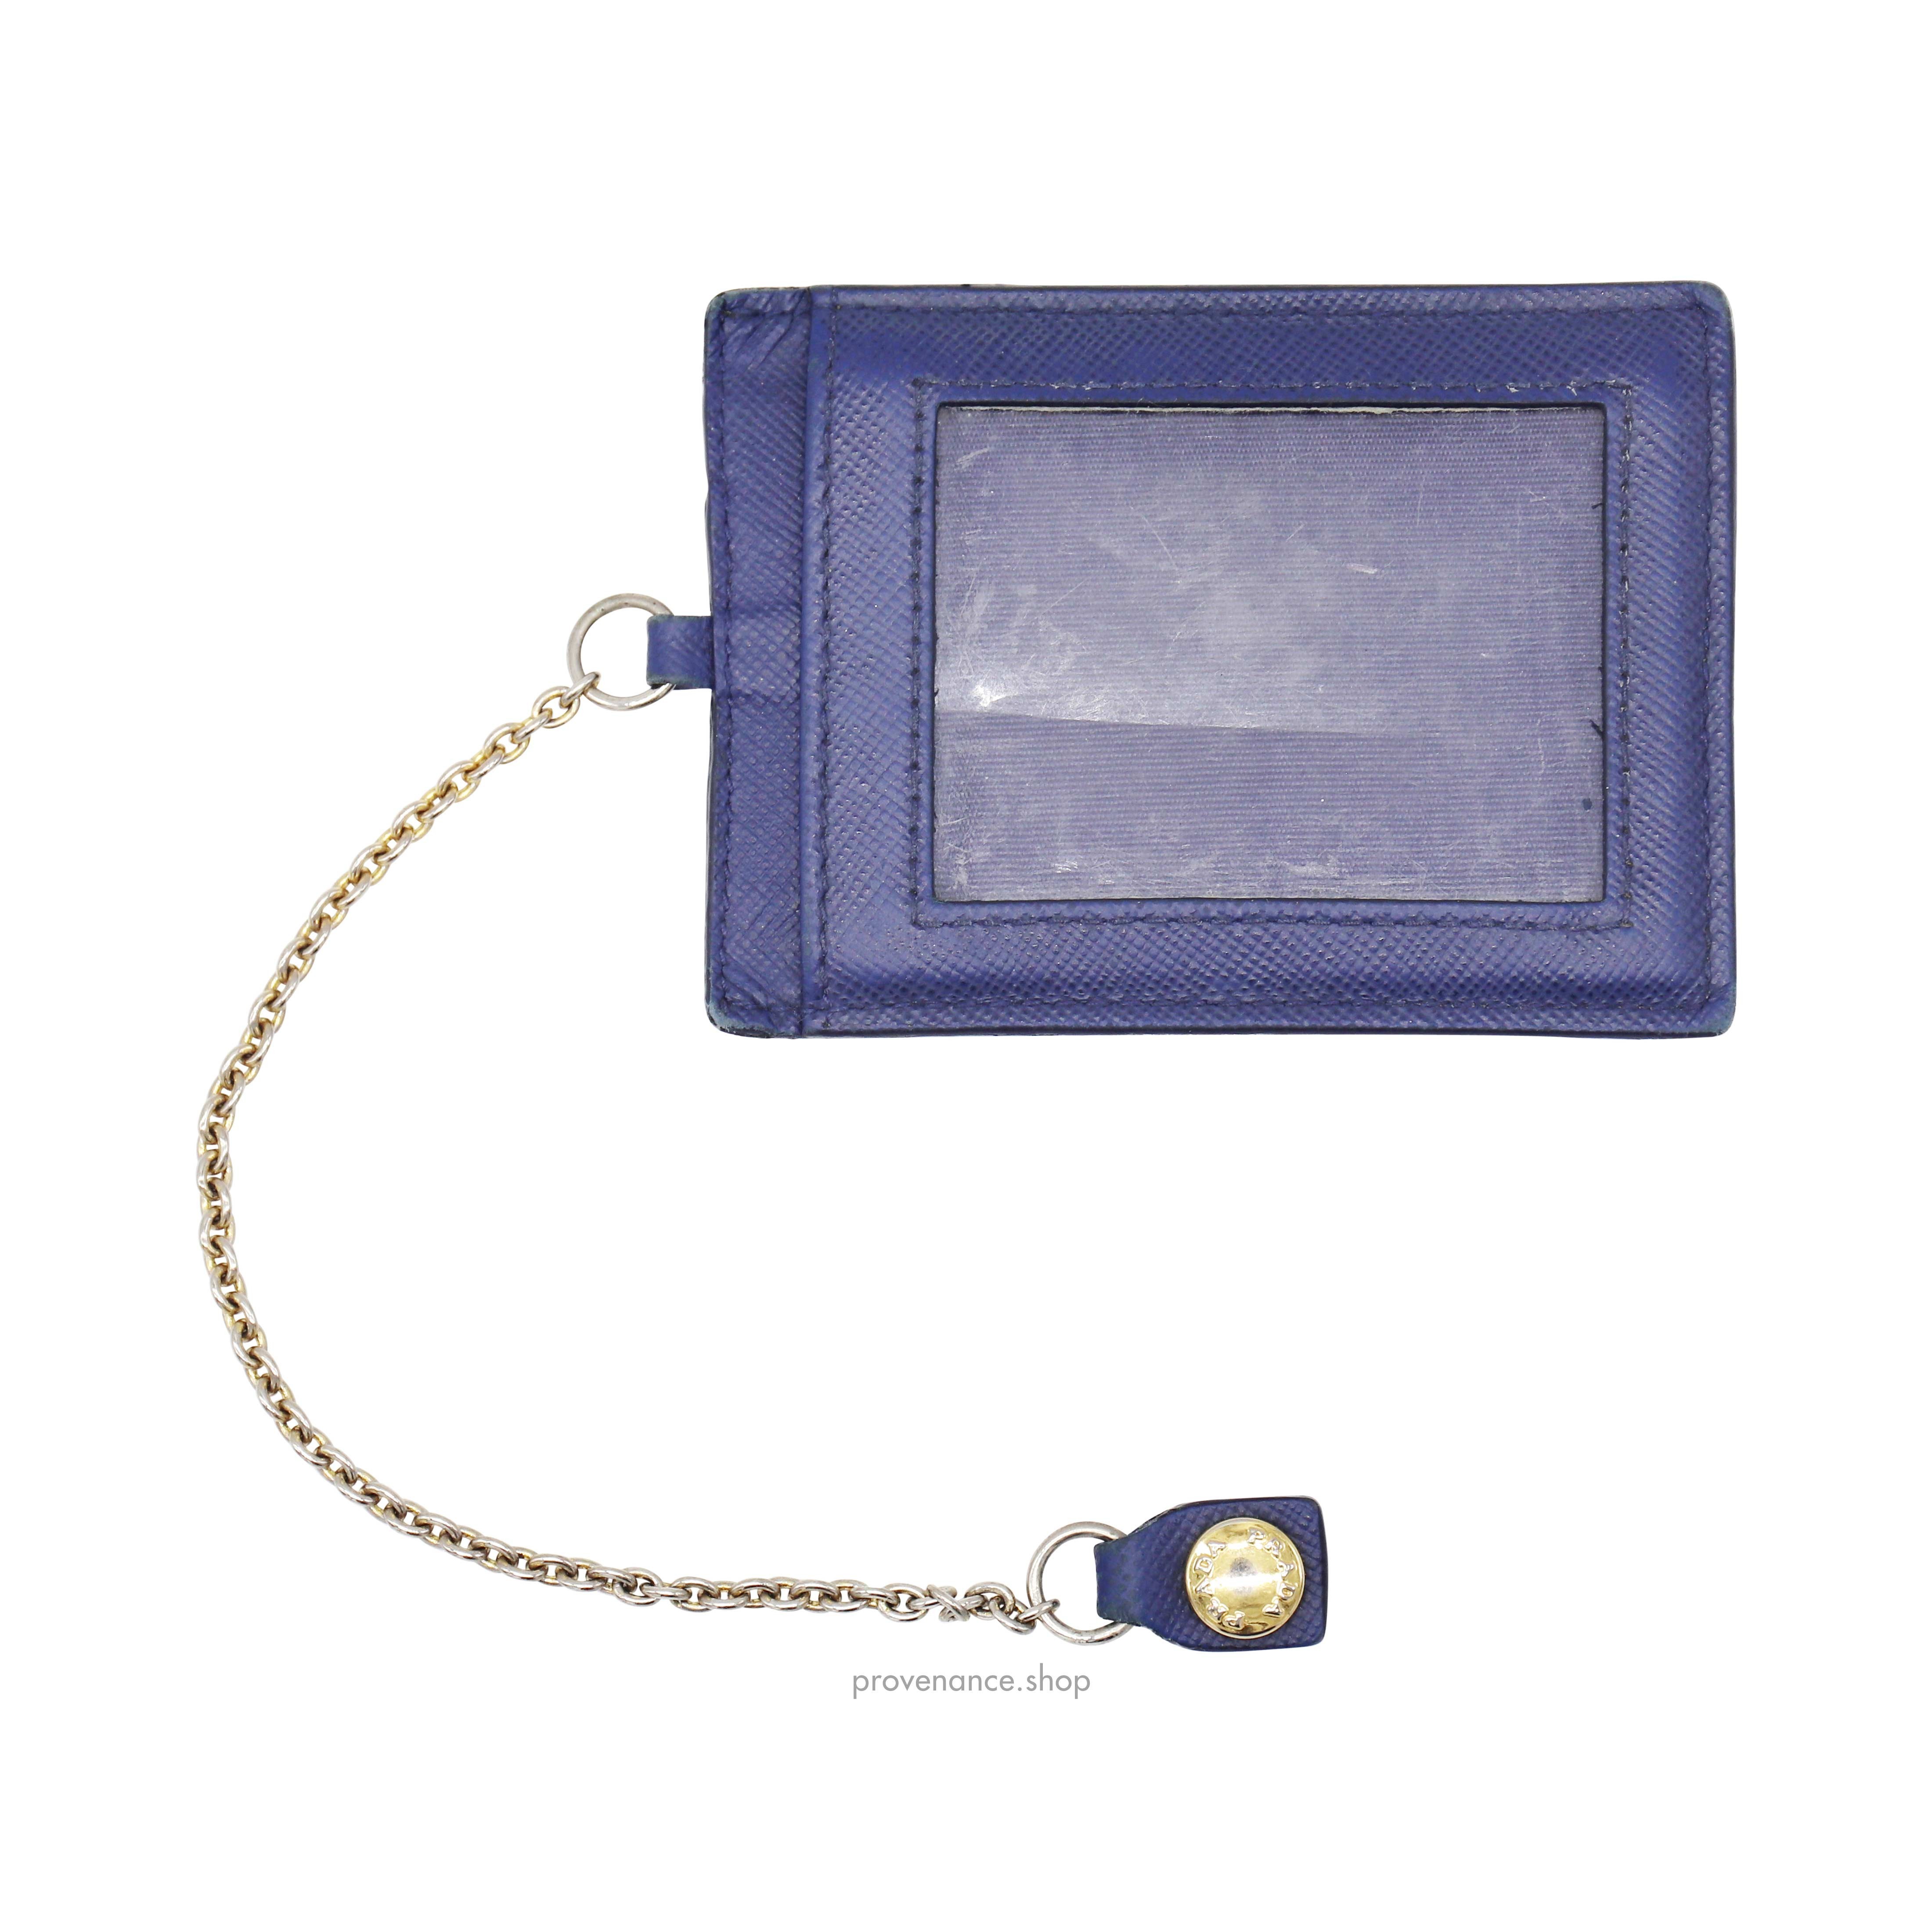 Prada Cardholder Wallet - Navy Blue Saffiano Leather - 3